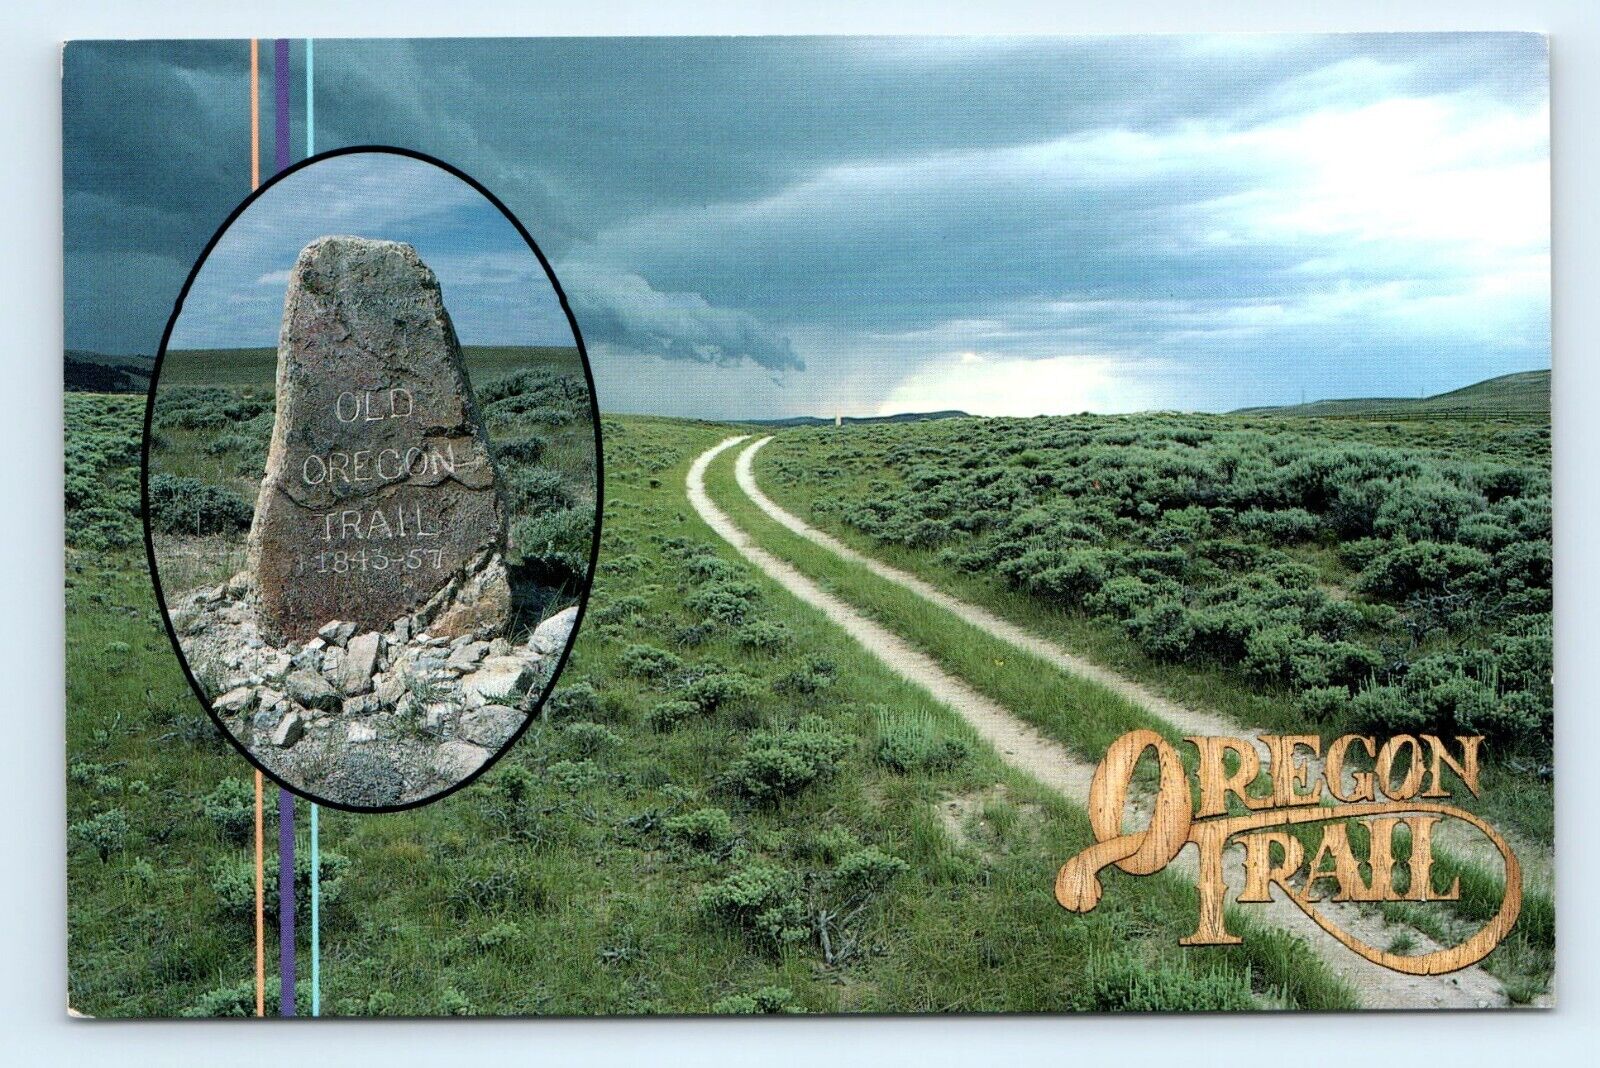 Oregon Trail South Pass Marker Farson WY Postcard